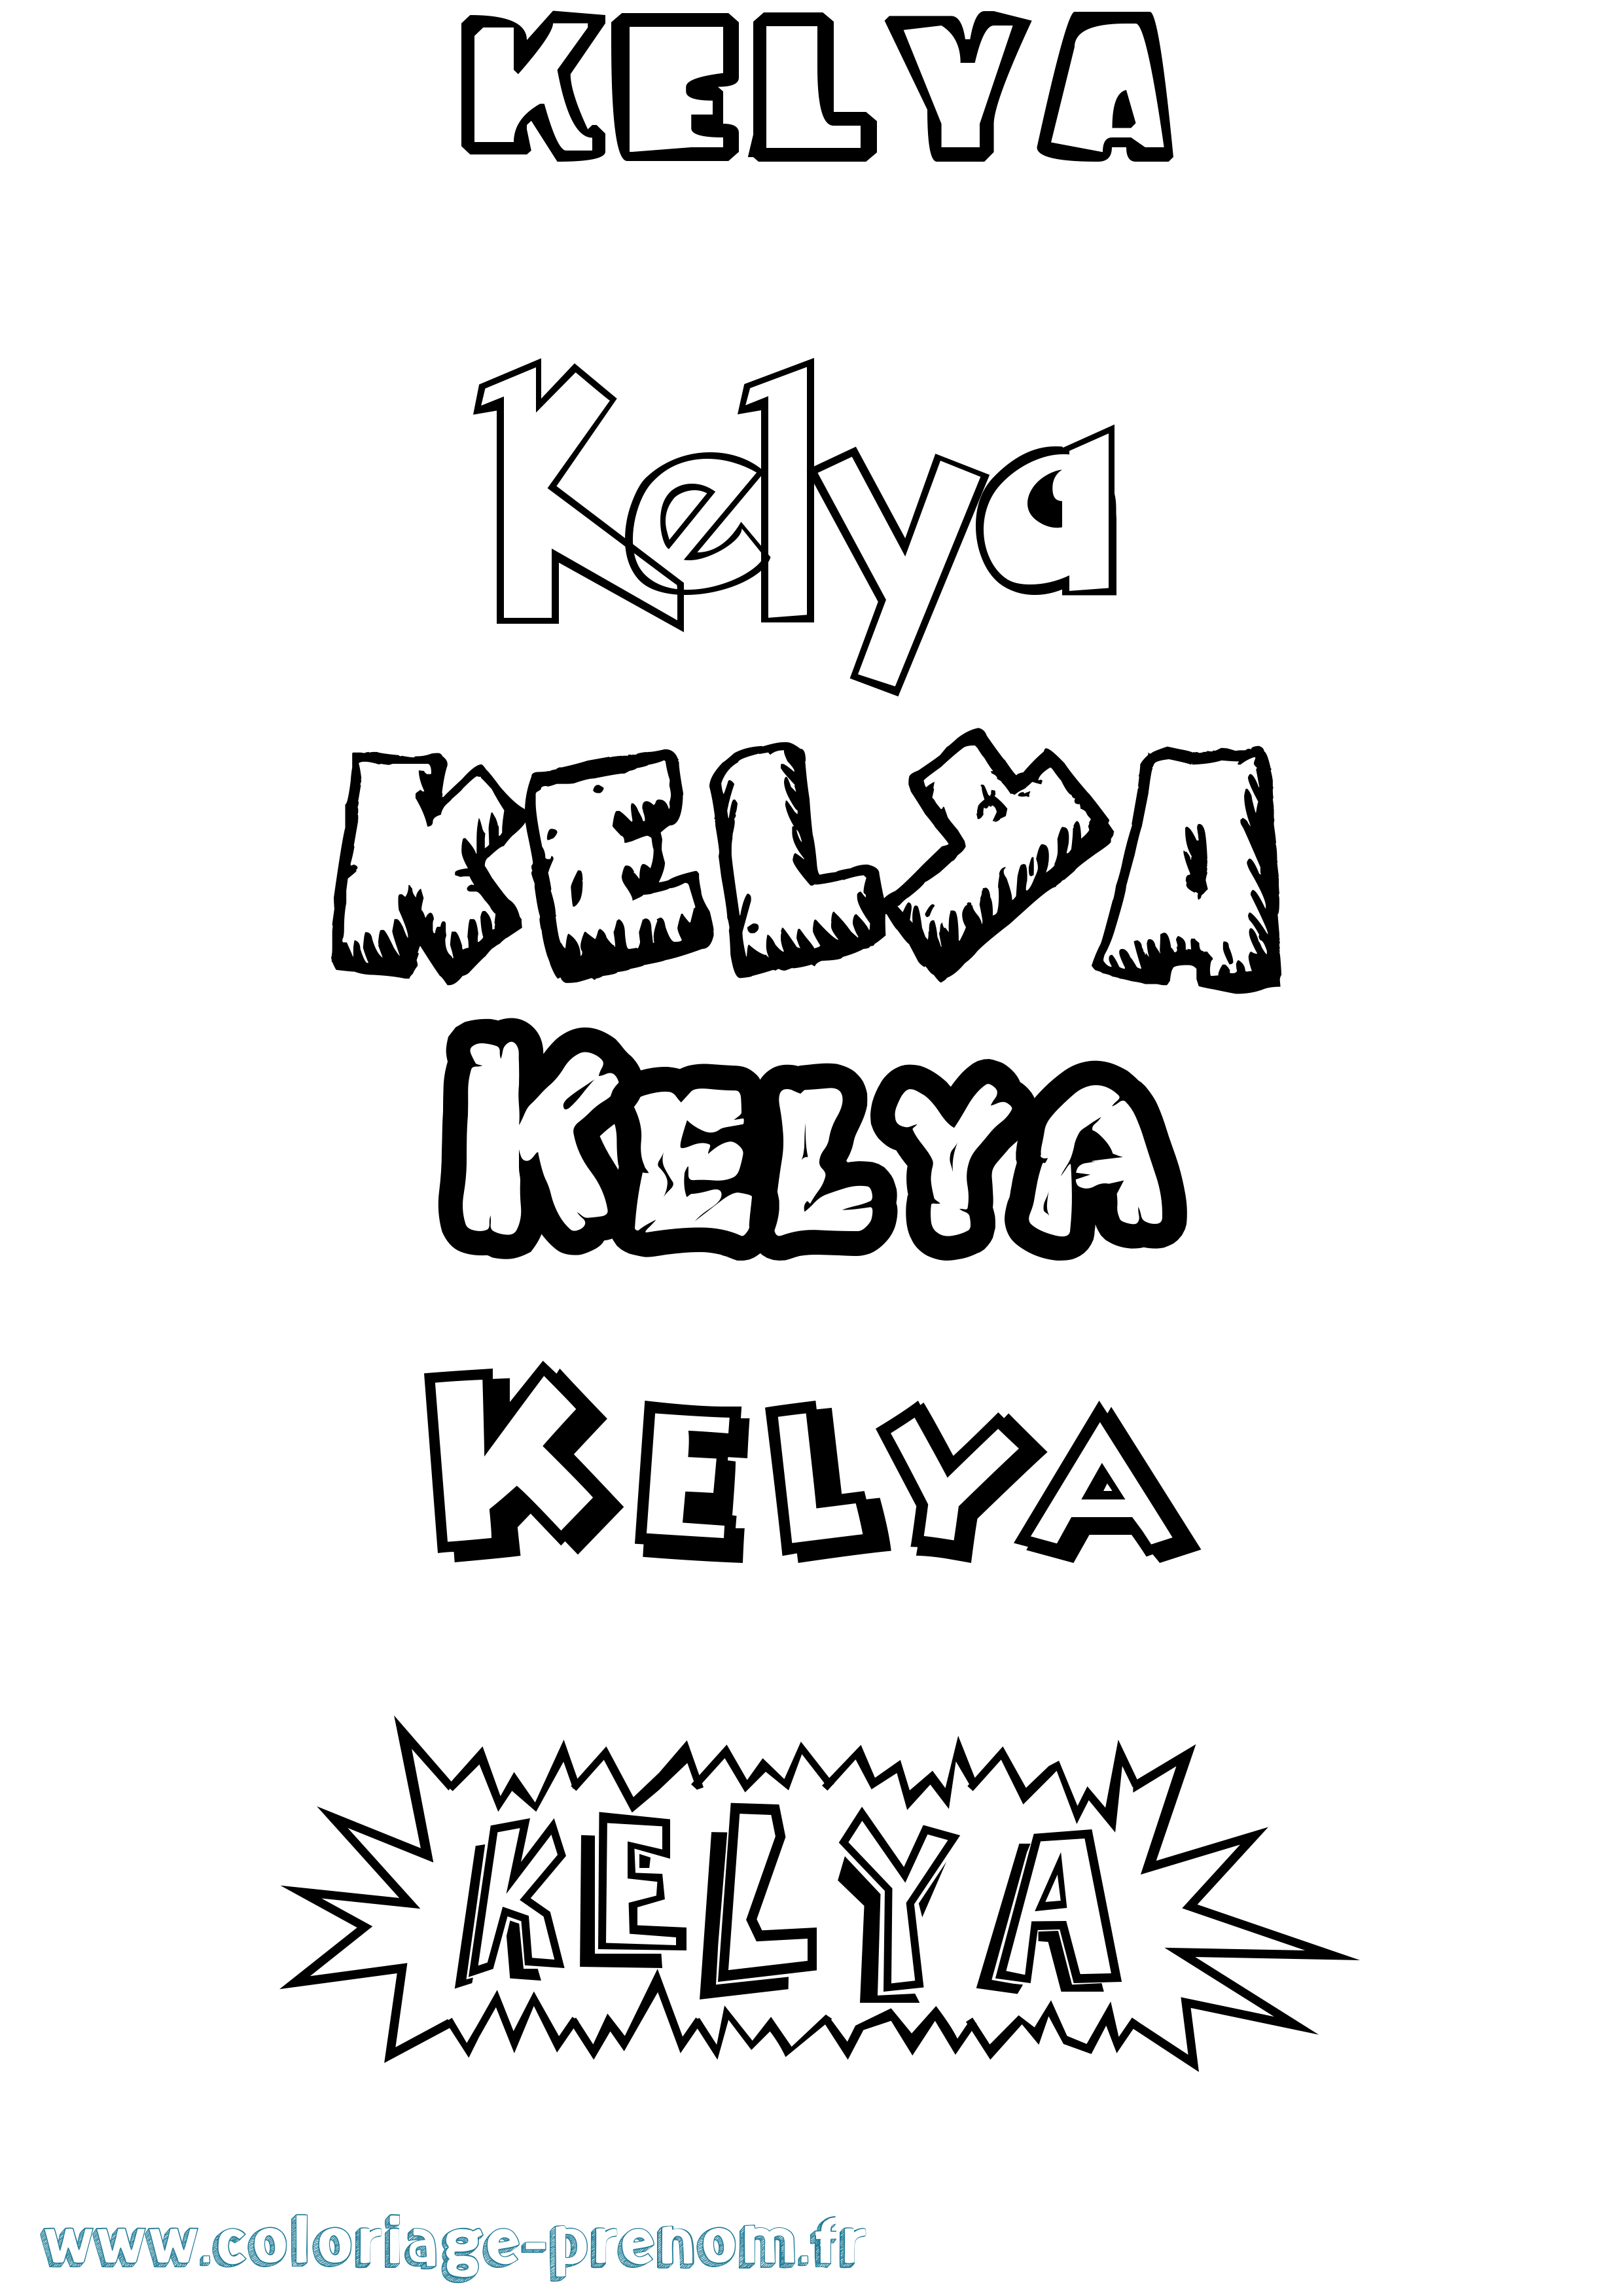 Coloriage prénom Kelya